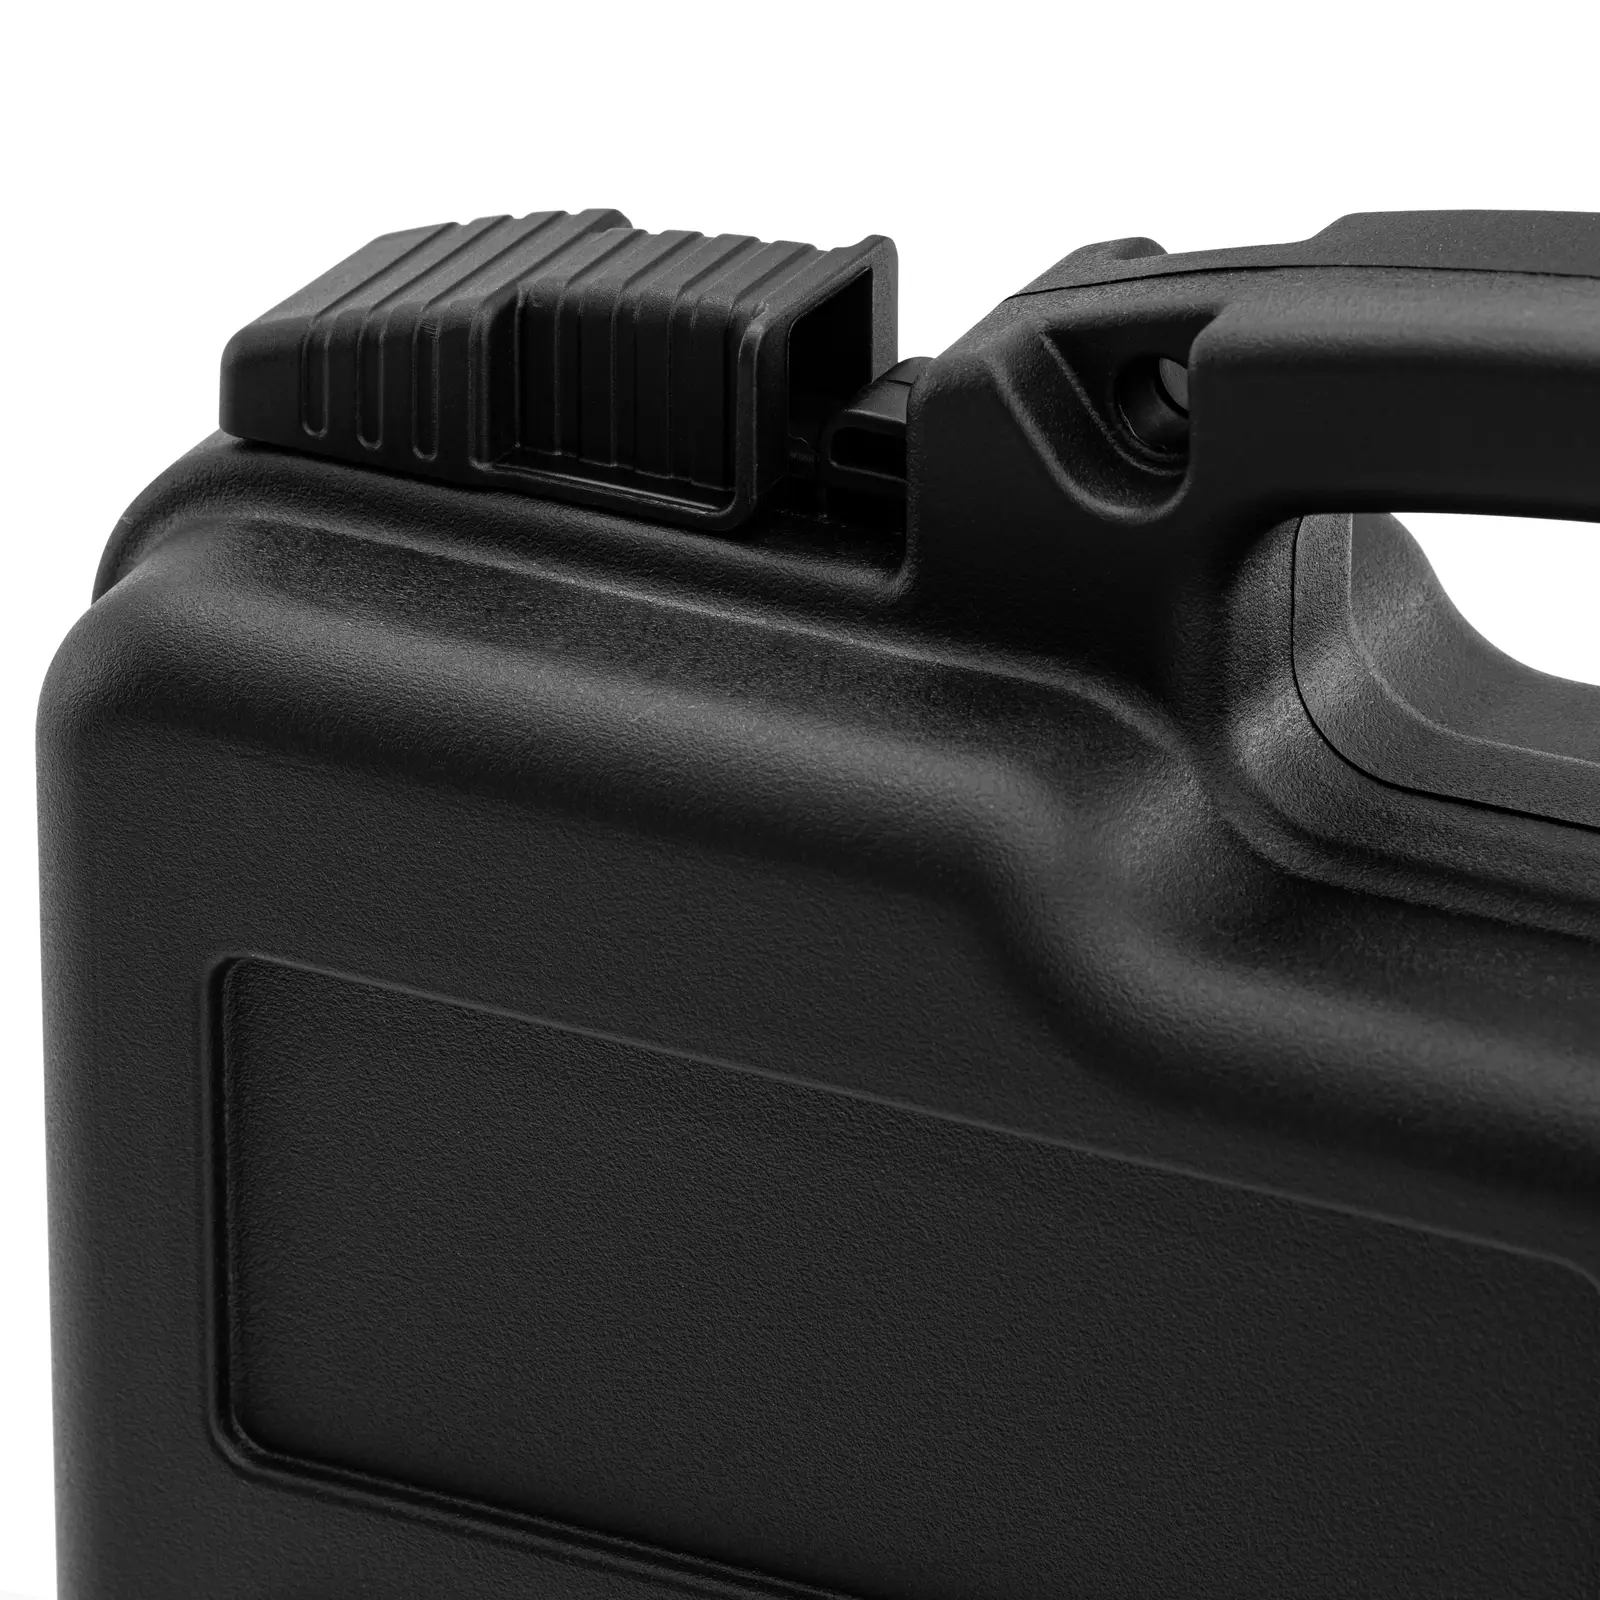 Maletín para cámara fotográfica - resistente al agua - 3.6 L - negro